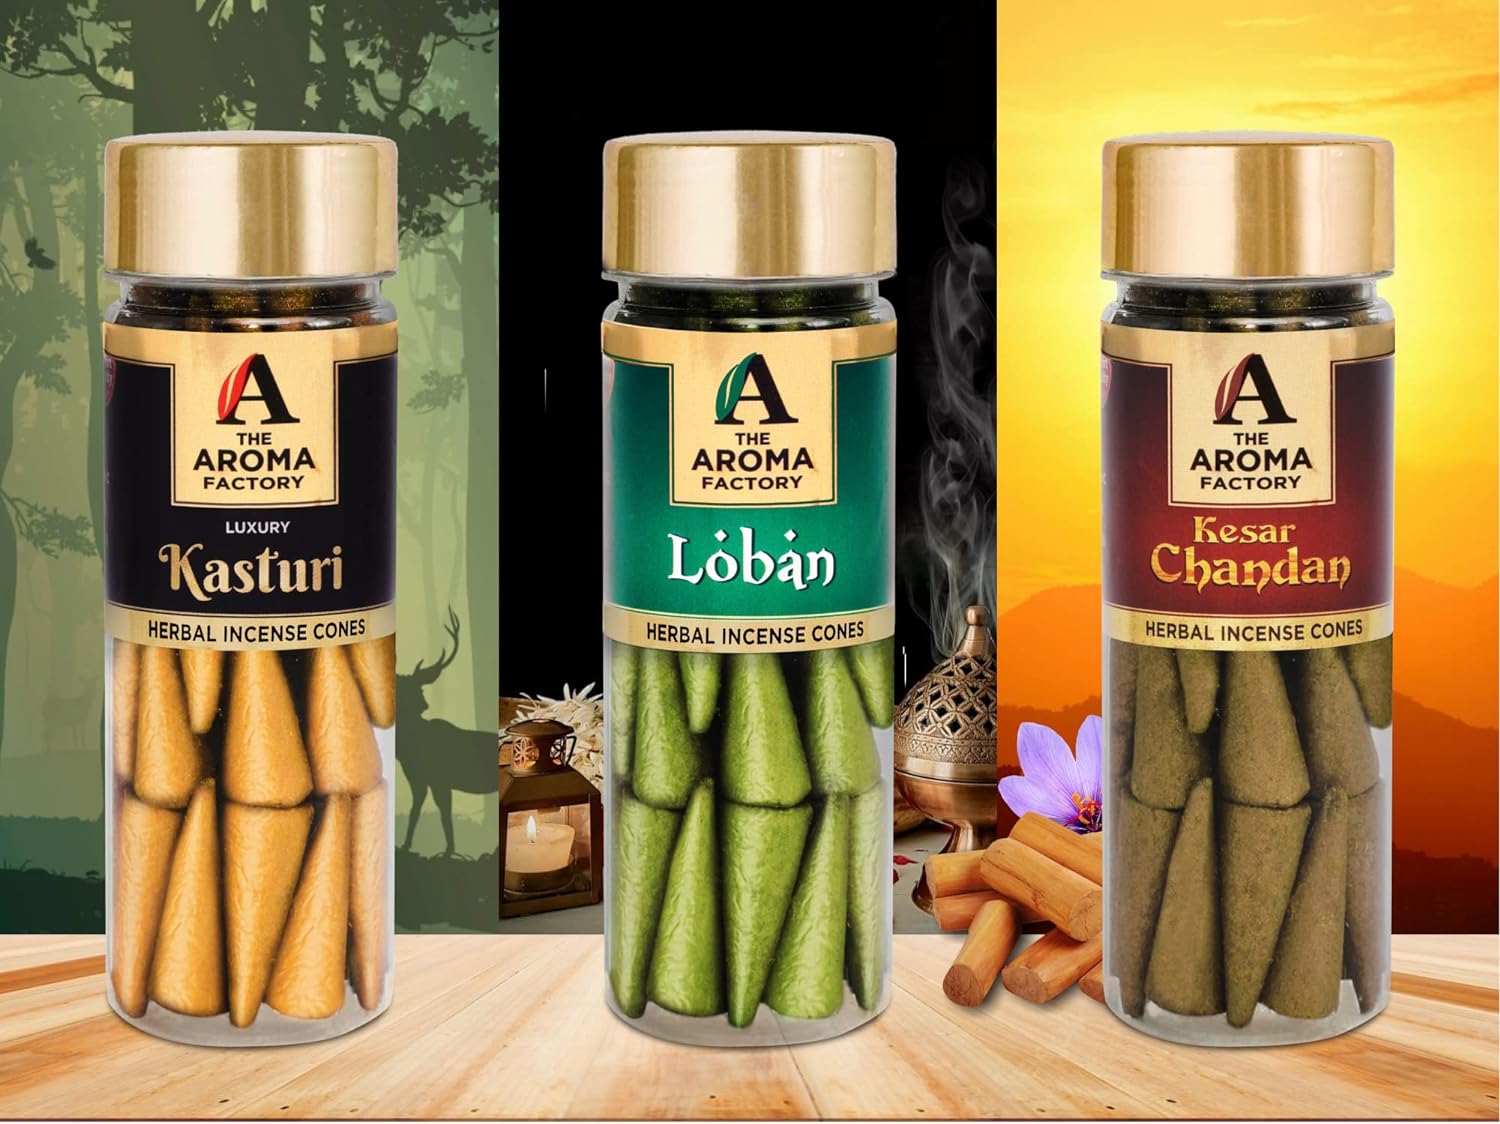 The Aroma Factory Incense Dhoop Cone for Pooja, Loban, Kasturi & Kesar Chandan (100% Herbal & 0% Charcoal) 3 Bottles x 30 Cones